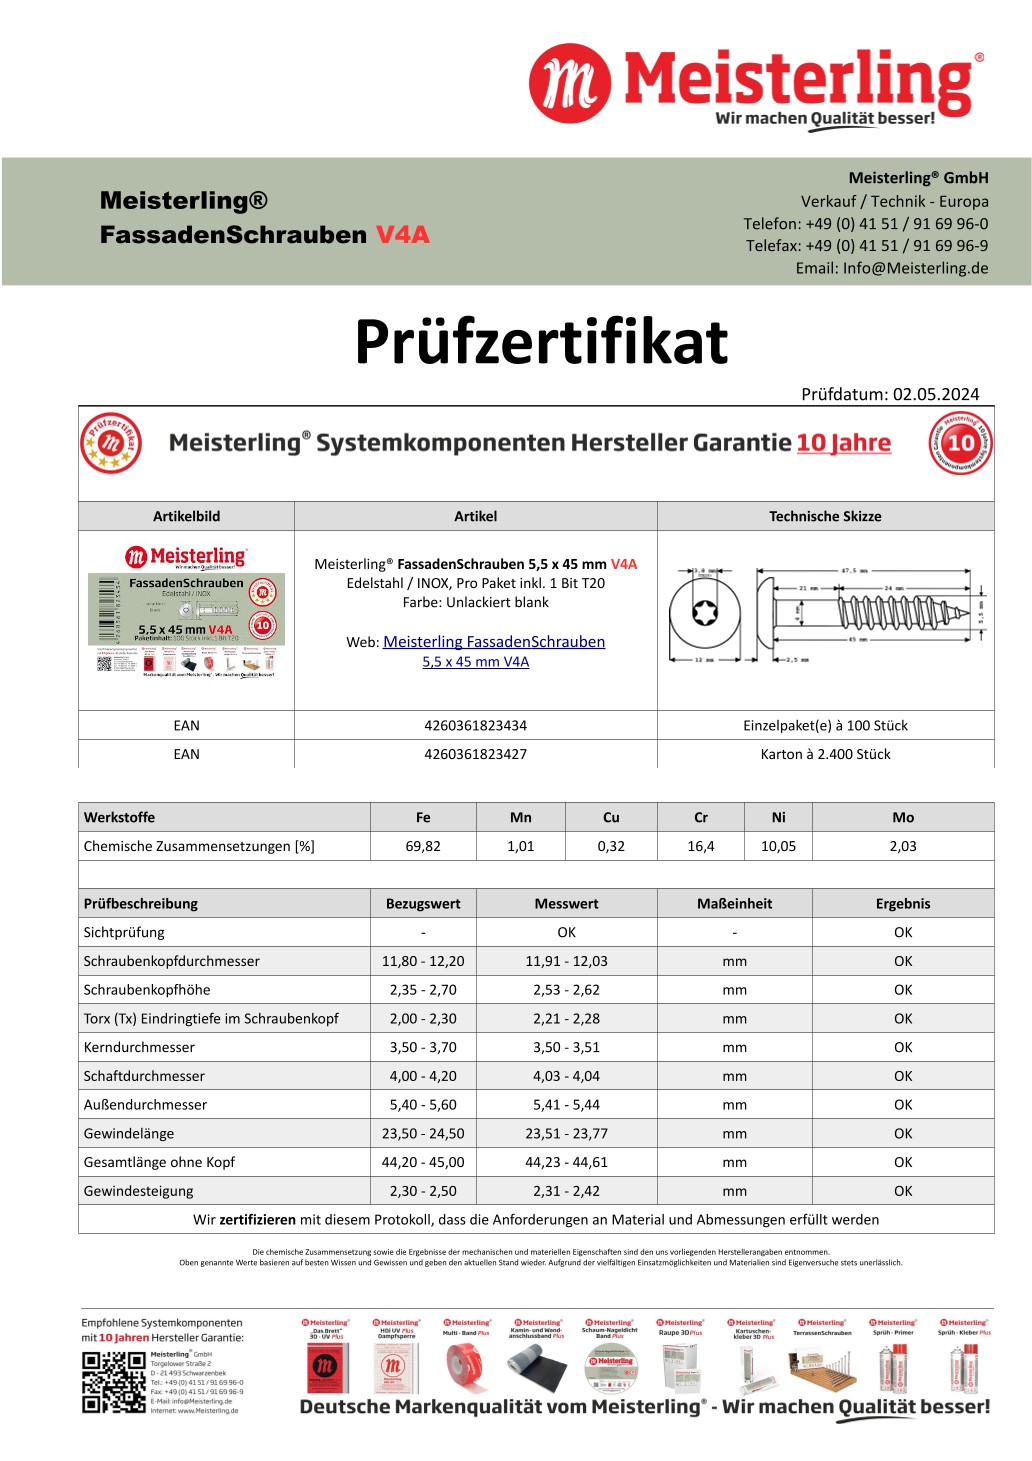 Prüfzertifikat Meisterling® FassadenSchrauben 5,5 x 45 mm V4a blank